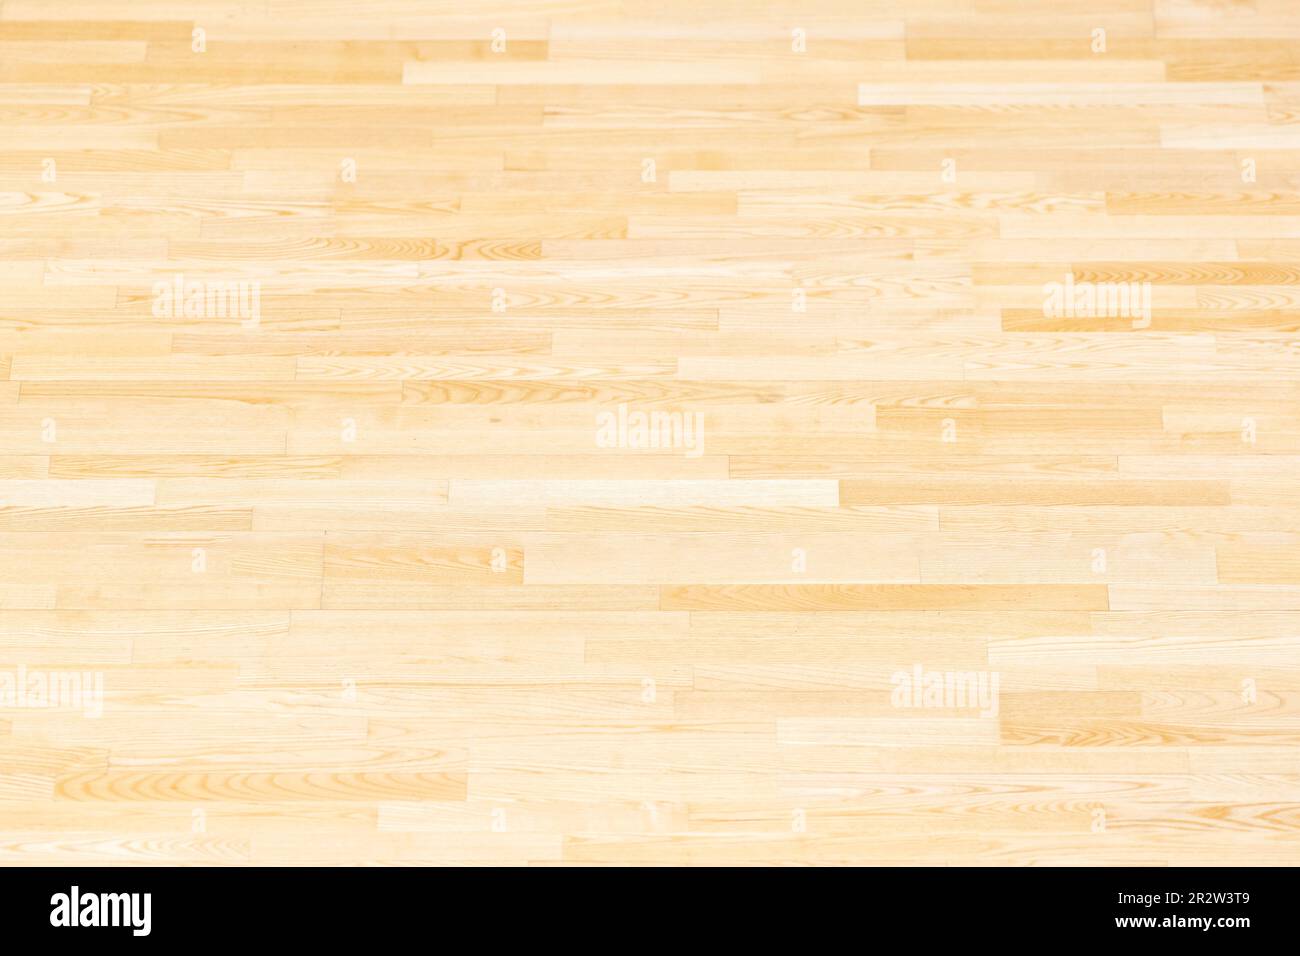 iWooden floor  basketball, badminton, futsal, handball, volleyball, football, soccer court. Wooden floor of sports hall with marking red lines on wood Stock Photo